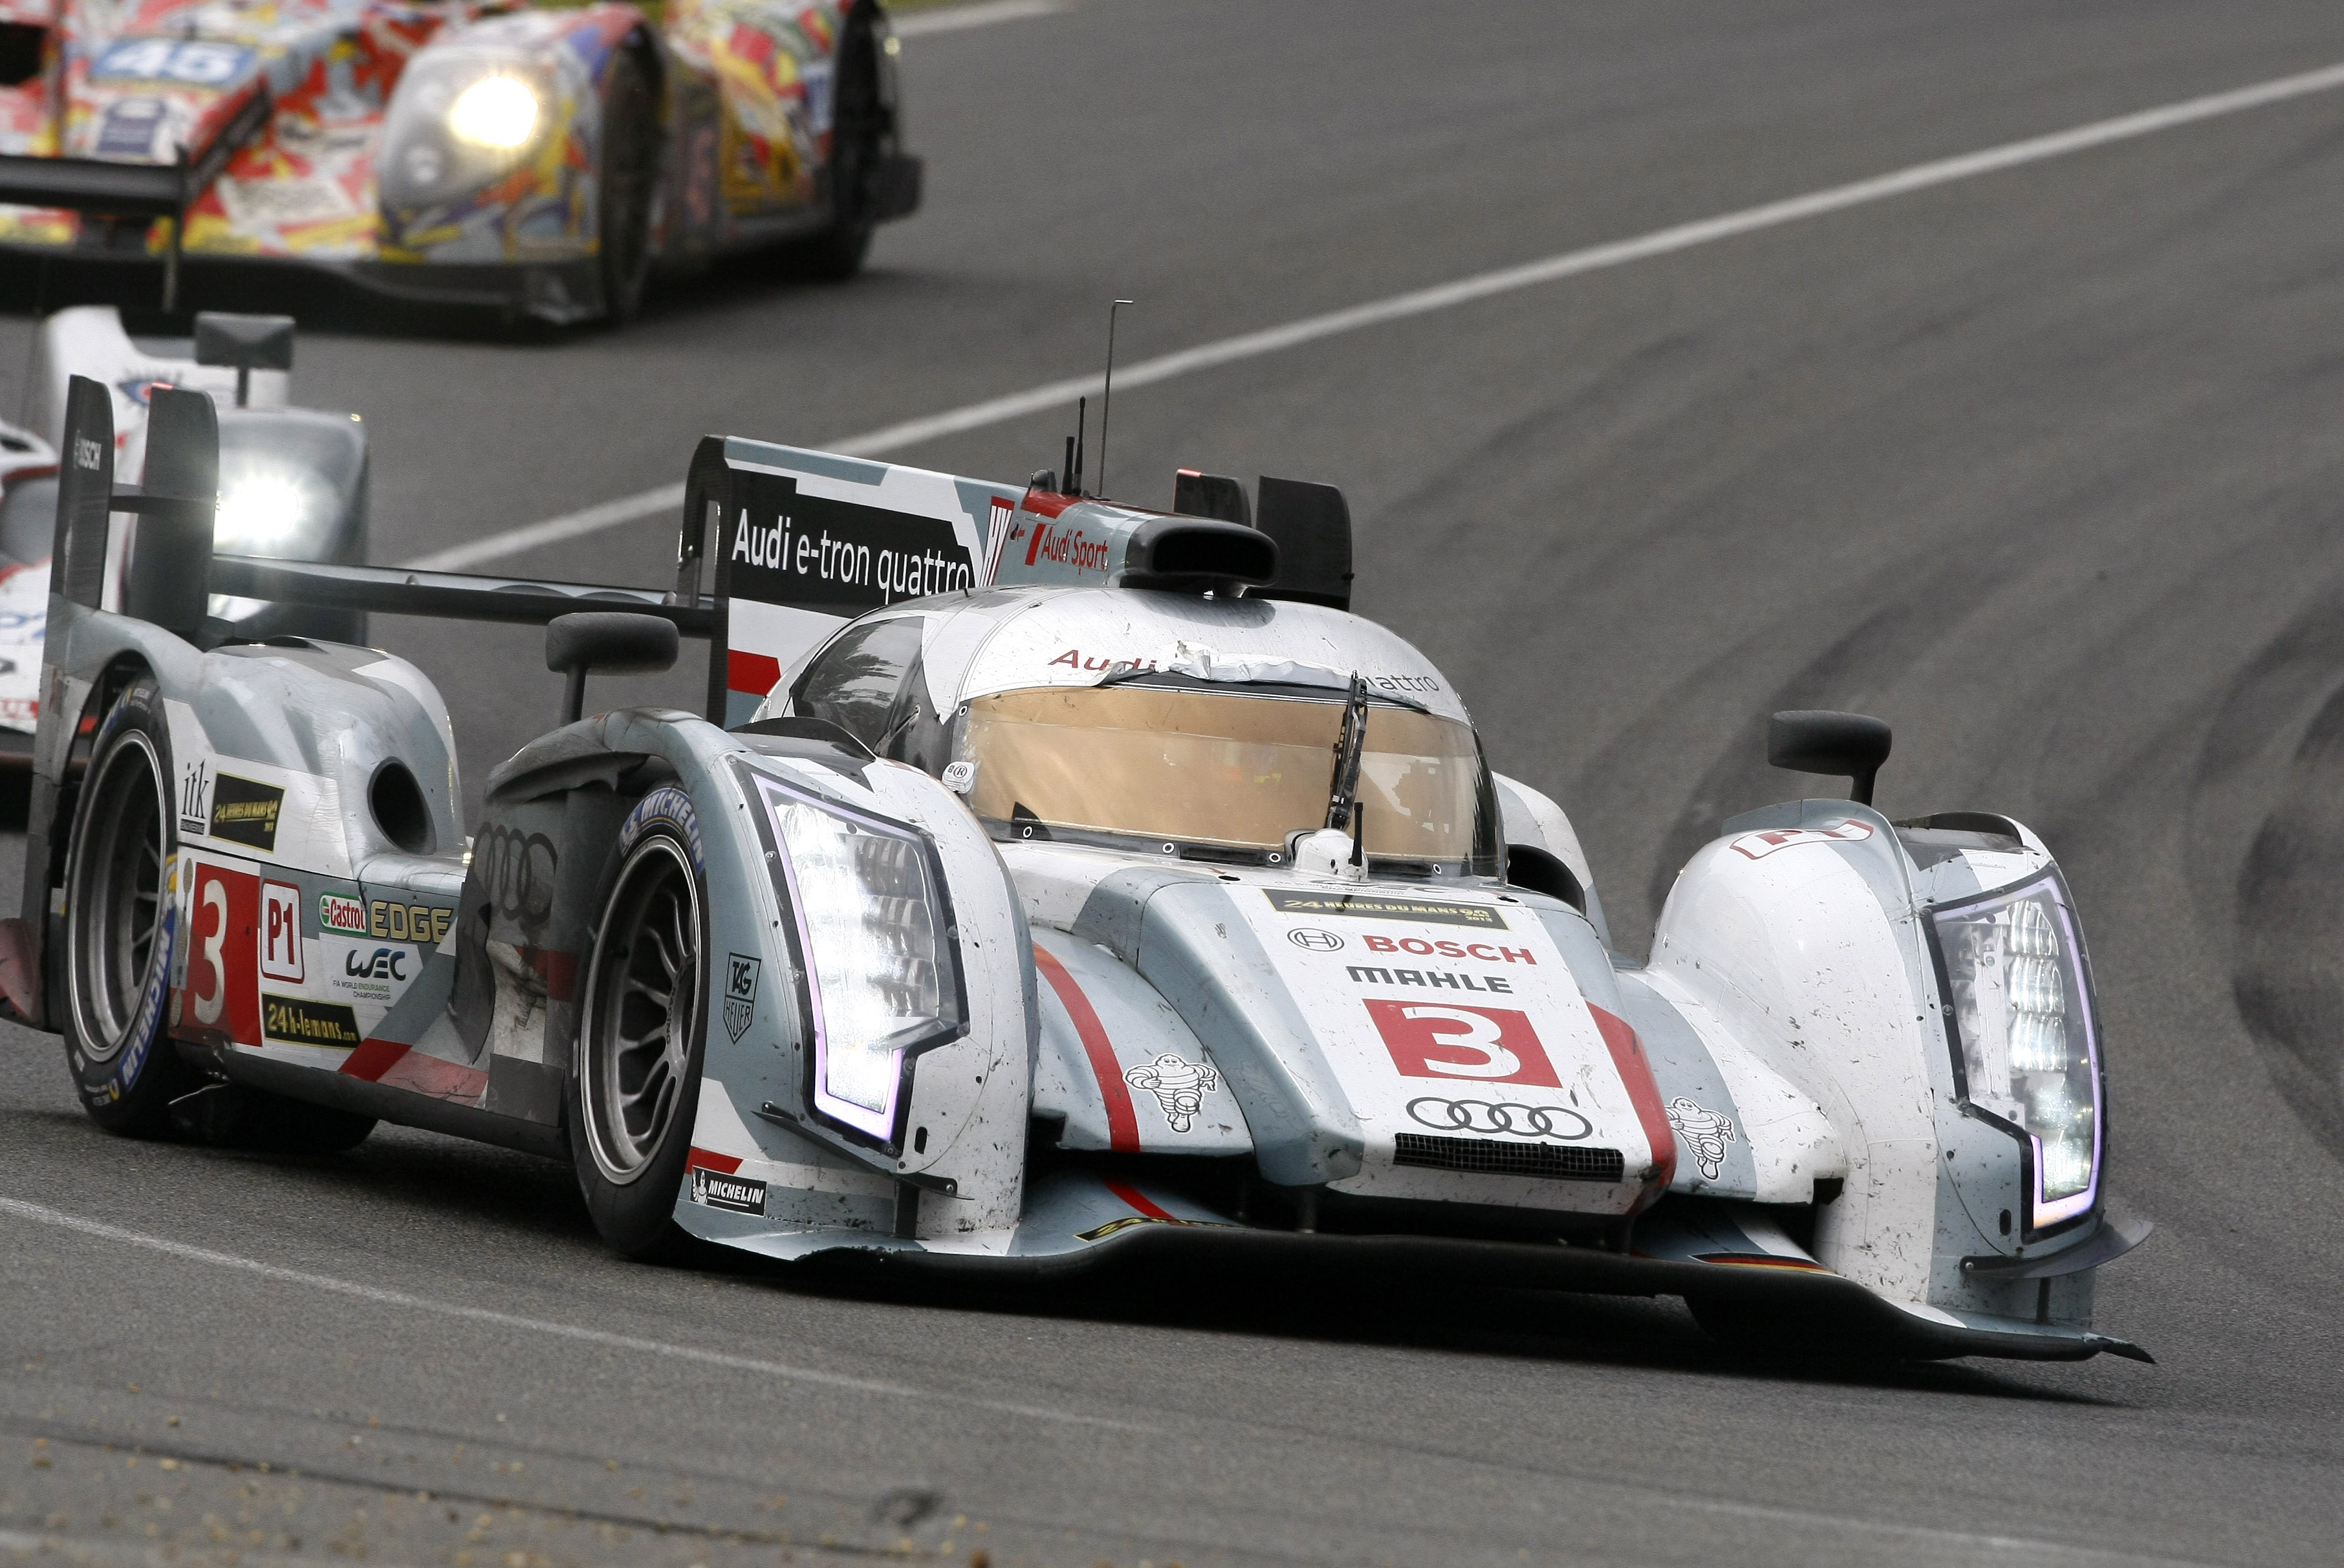 Le Mans 24h 2013: Στην κορυφή ο Allan McNish με Audi, ακολουθούν δύο Toyota